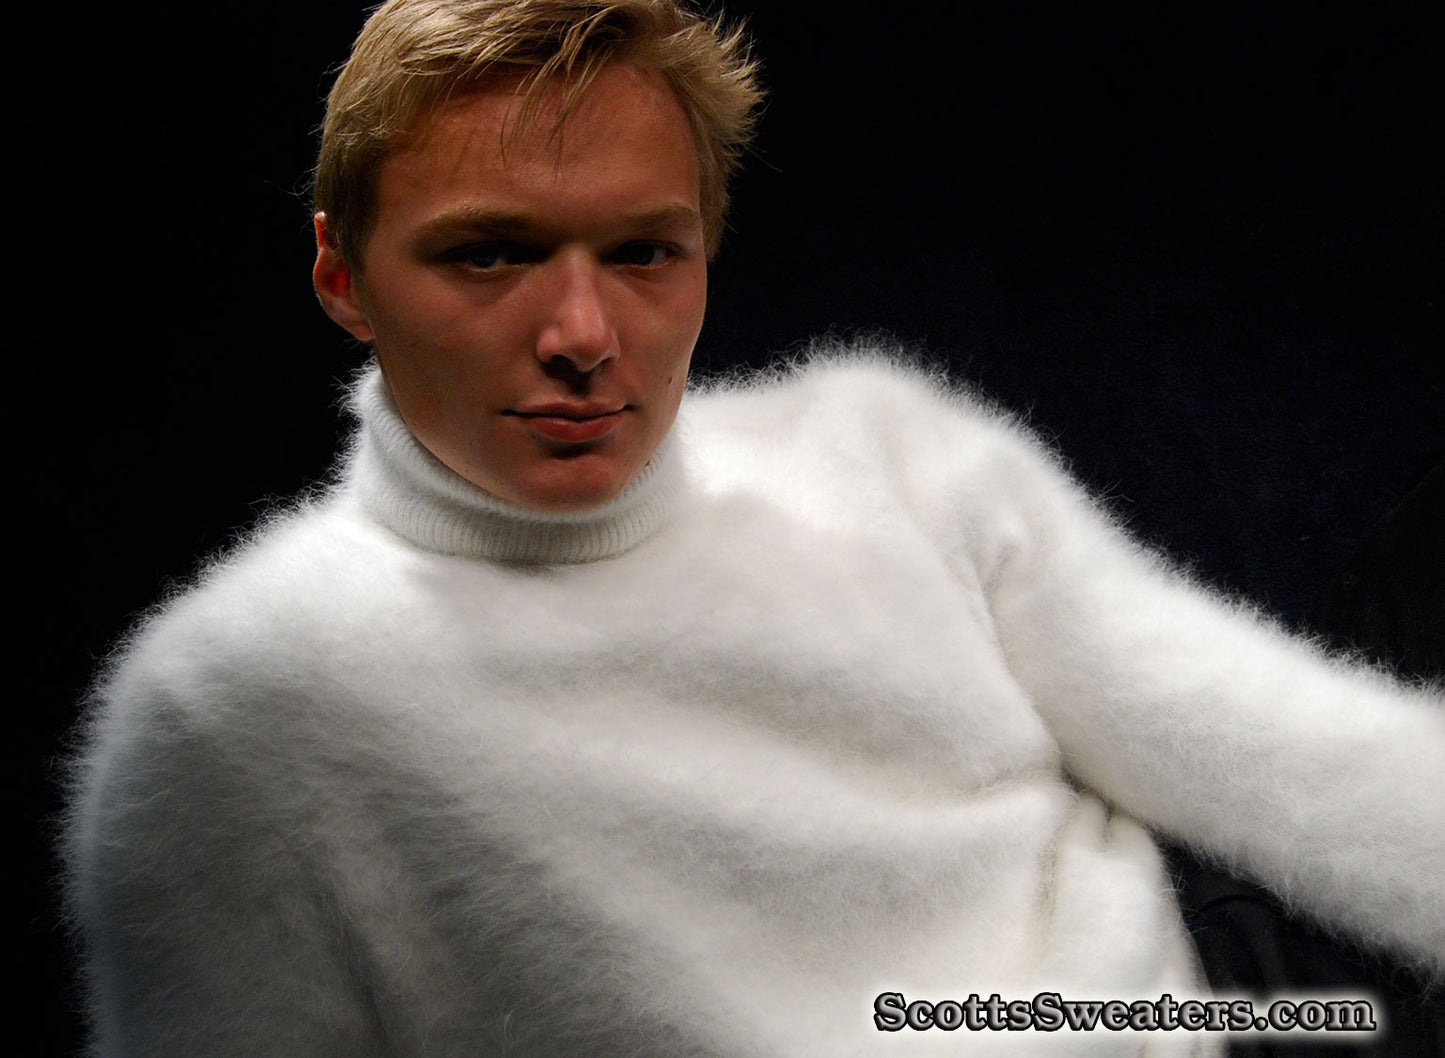 611-005T Men's Ultra-Soft Angora Turtleneck Sweater